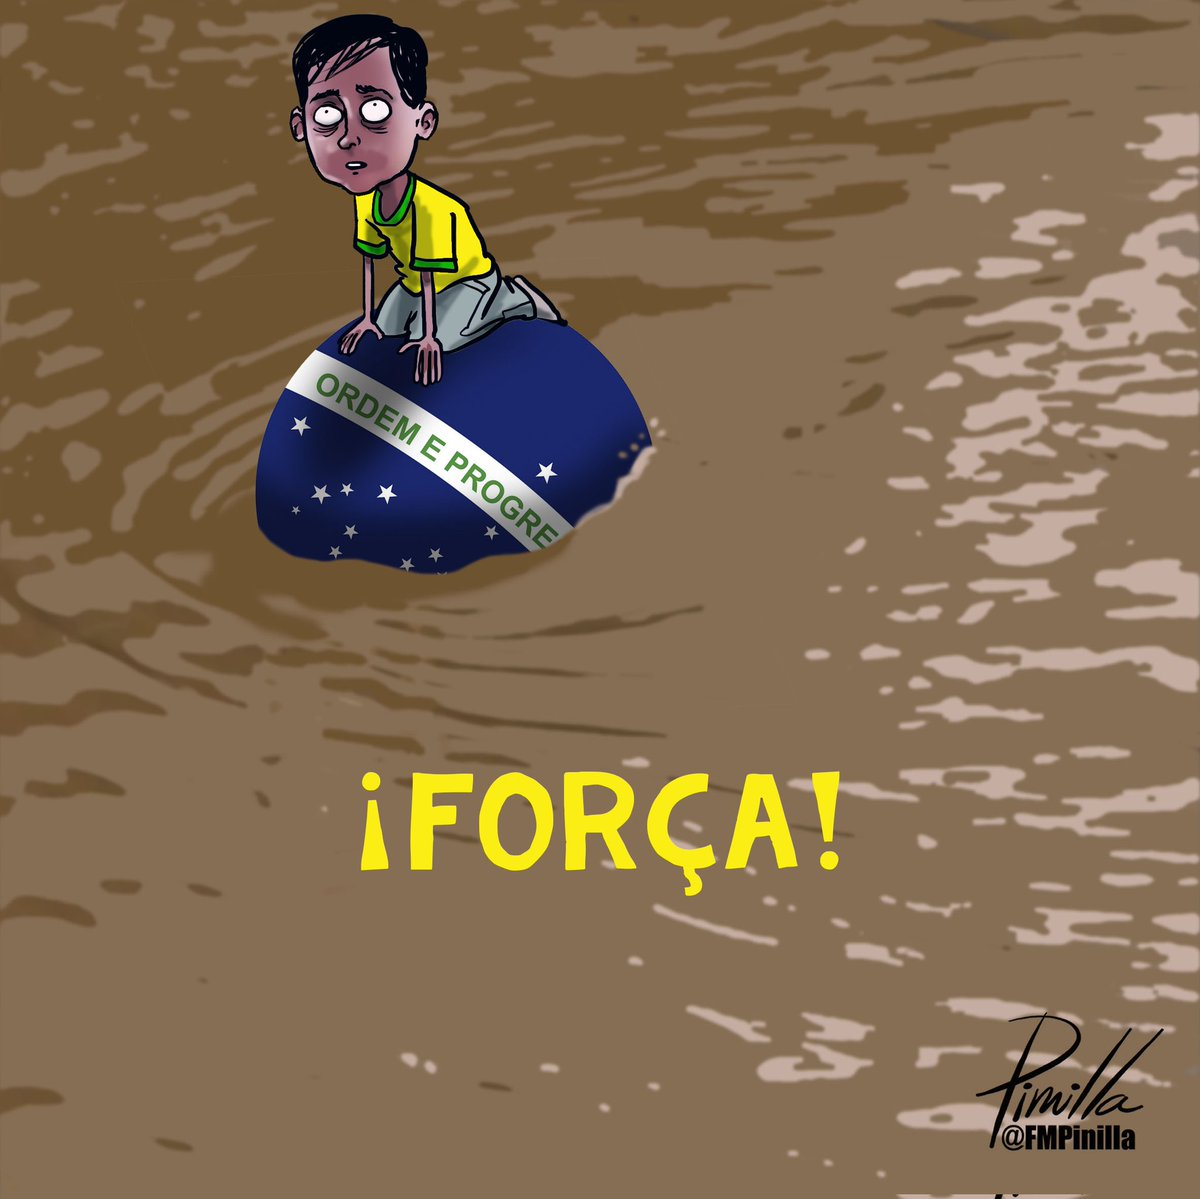 ¡Fuerza #brasil🇧🇷!
•
#dibujolibre para @dlasamericas_
•
#caricatura #cartoon #usa #eeuu🇺🇸 #eeuuu #politicalcartoon #brasil